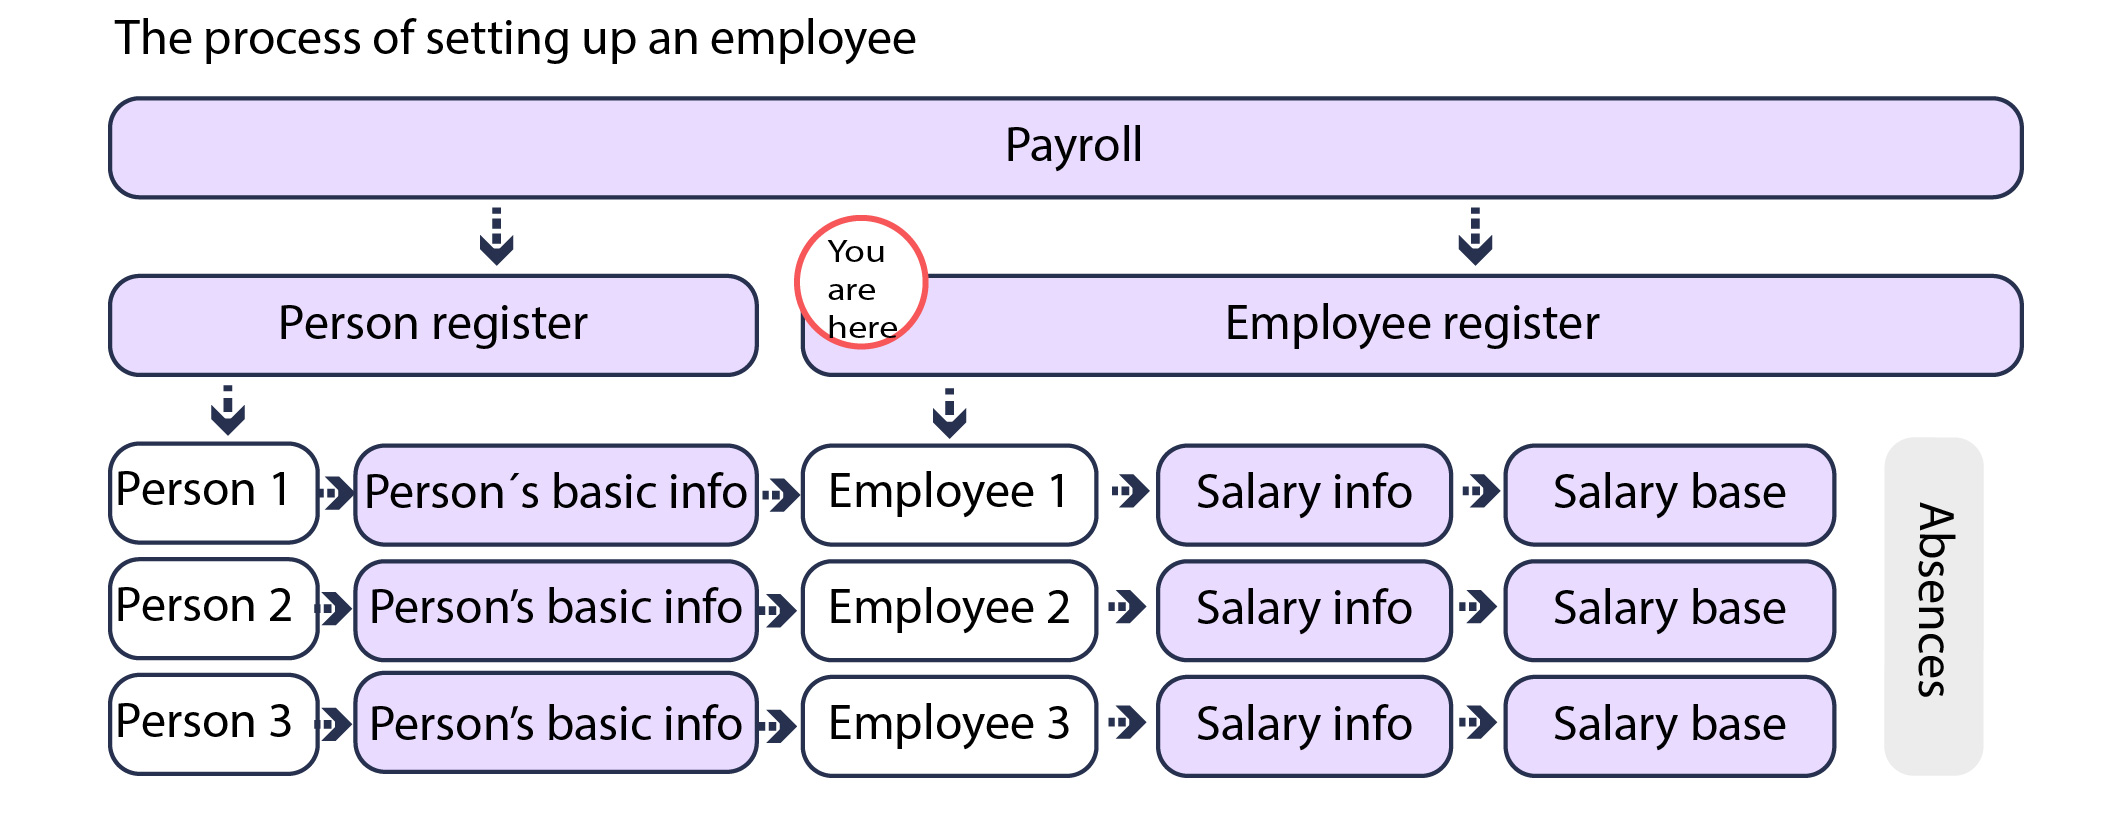 palkansaajarekisteri__the_process_of_setting_up_an_employee_en.jpg